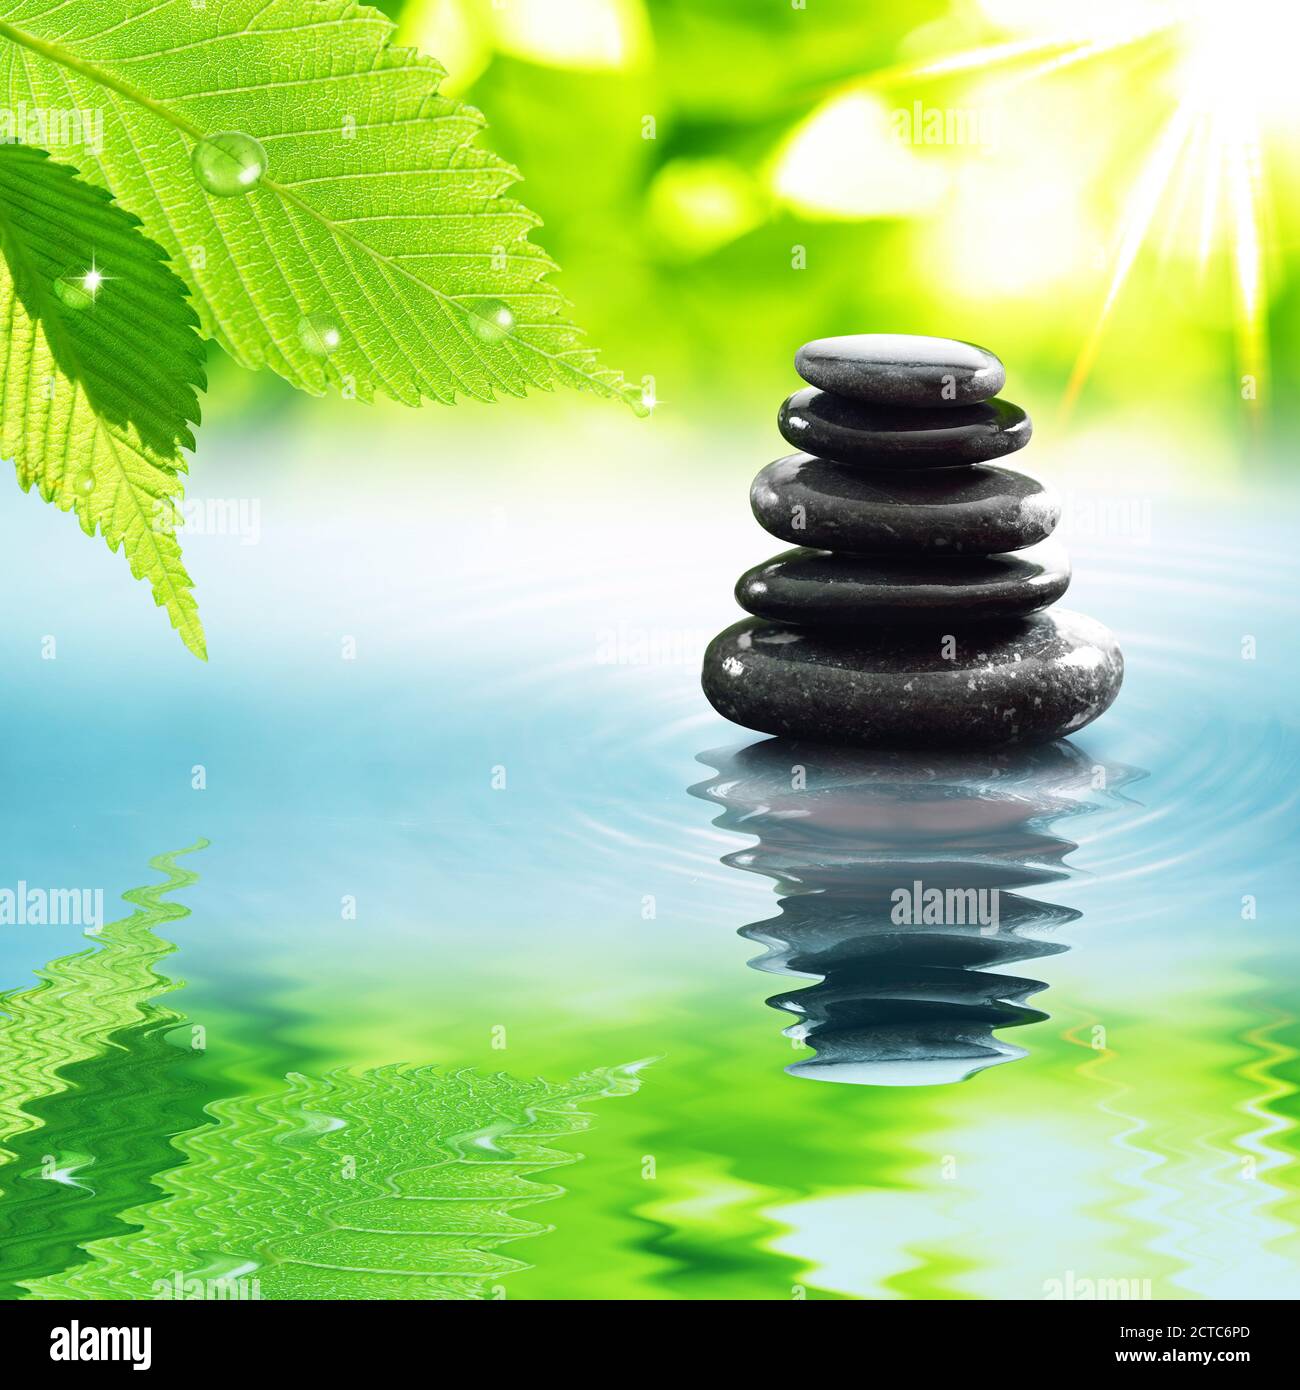 Pietre di zen equilibrate in acqua e foglie verdi Foto Stock